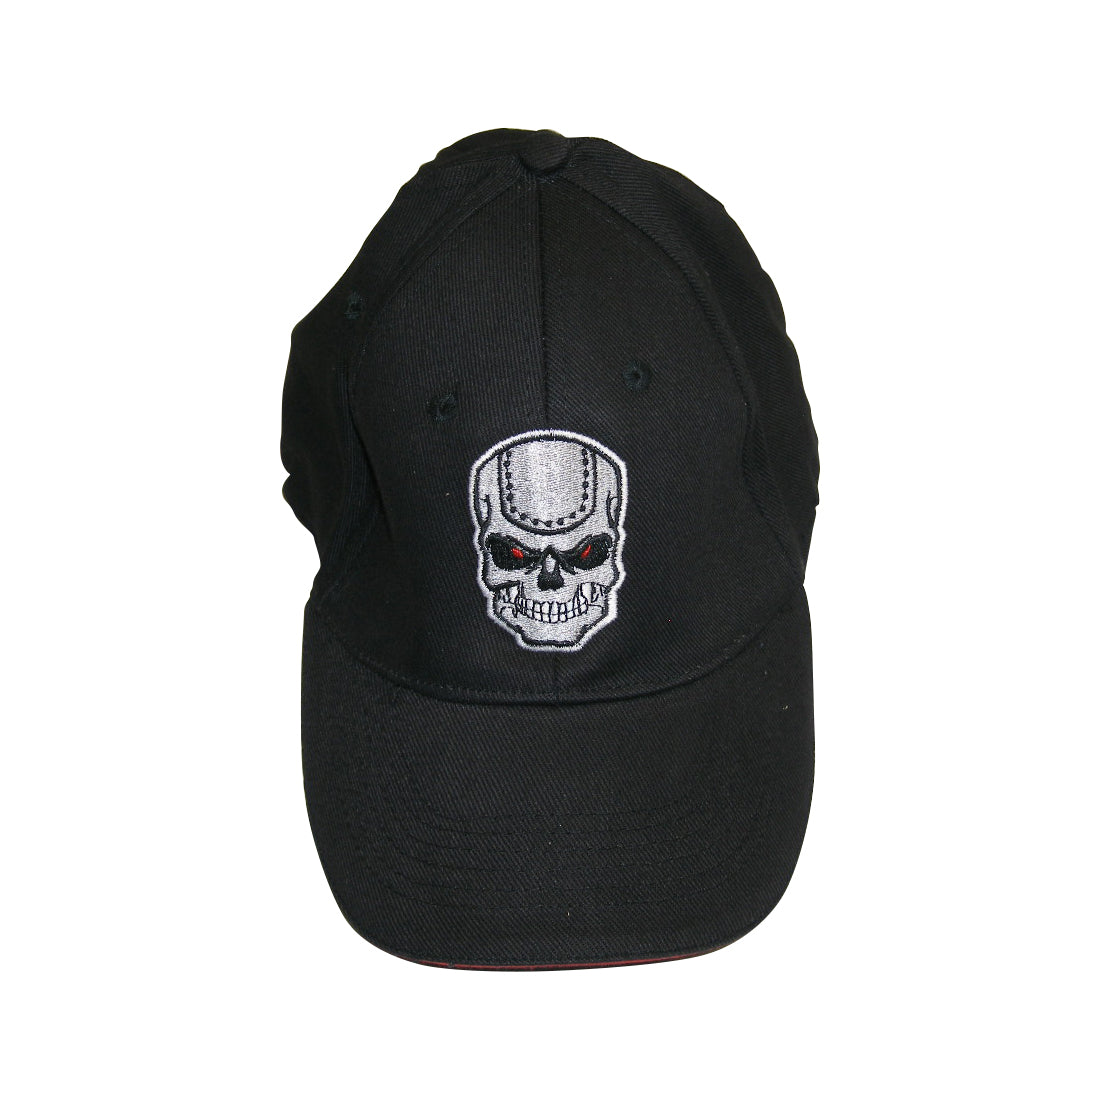 Bob Long Intimidator embroidered Skull Paintball Hat Trucker Baseball Black Cap